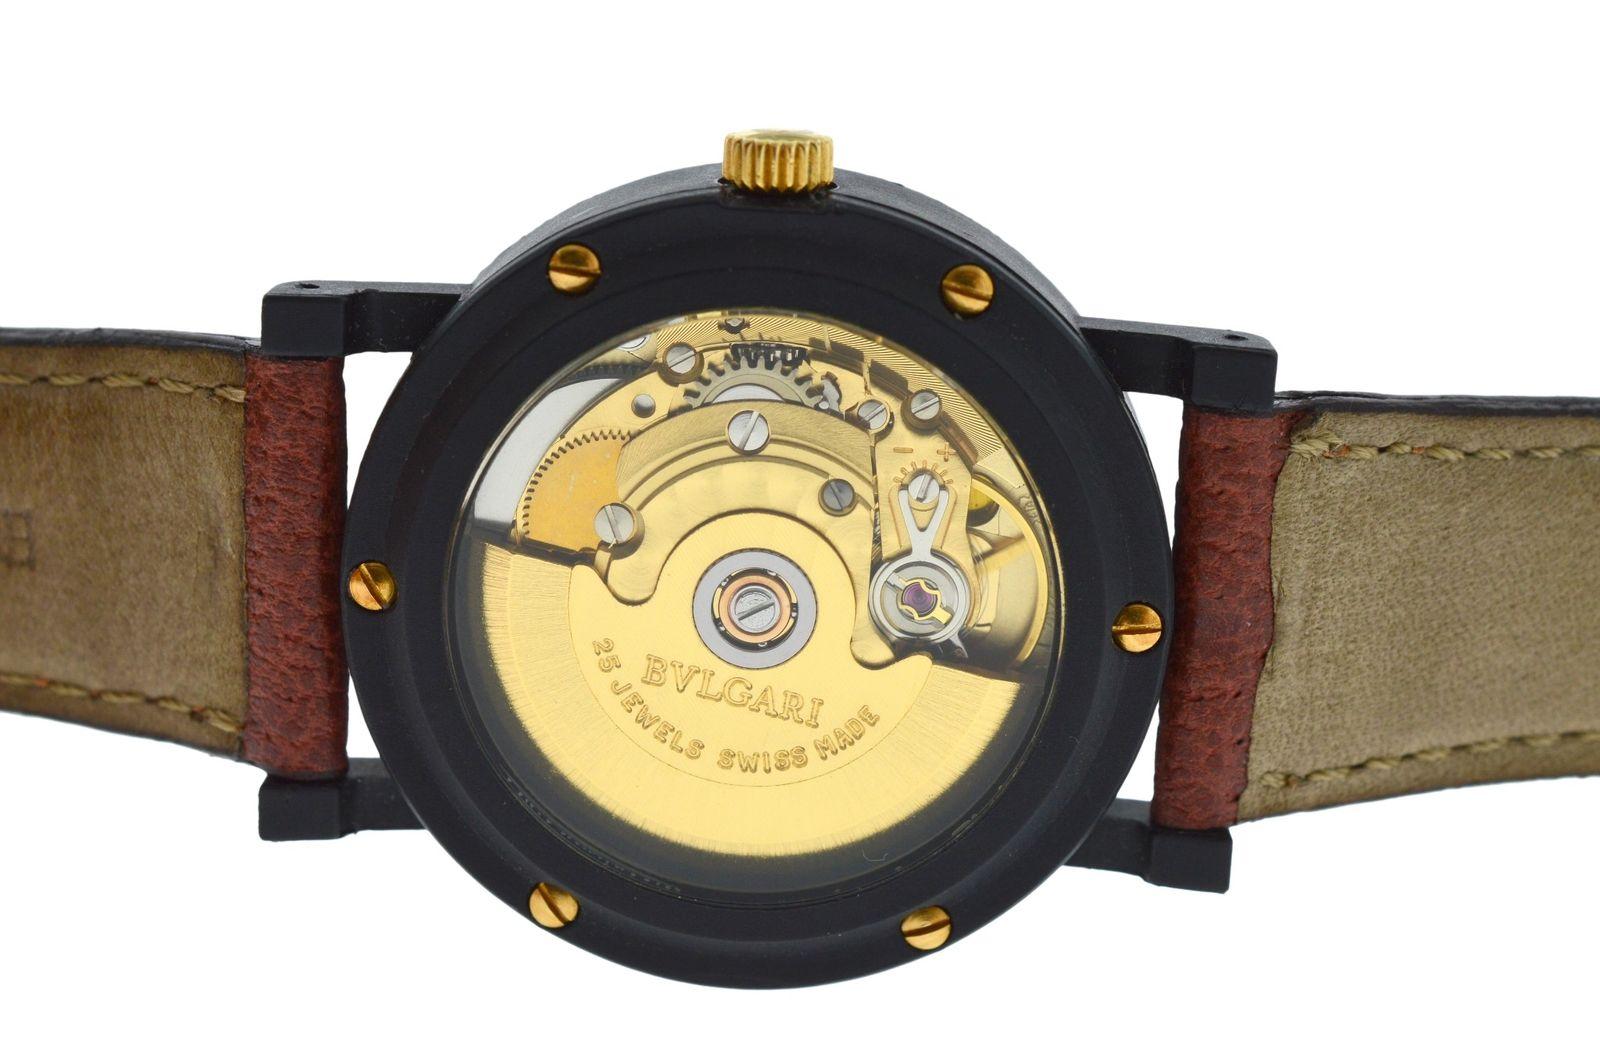 Modern Unisex Bvlgari International Edition Limited Edition Carbon Gold Automatic Watch